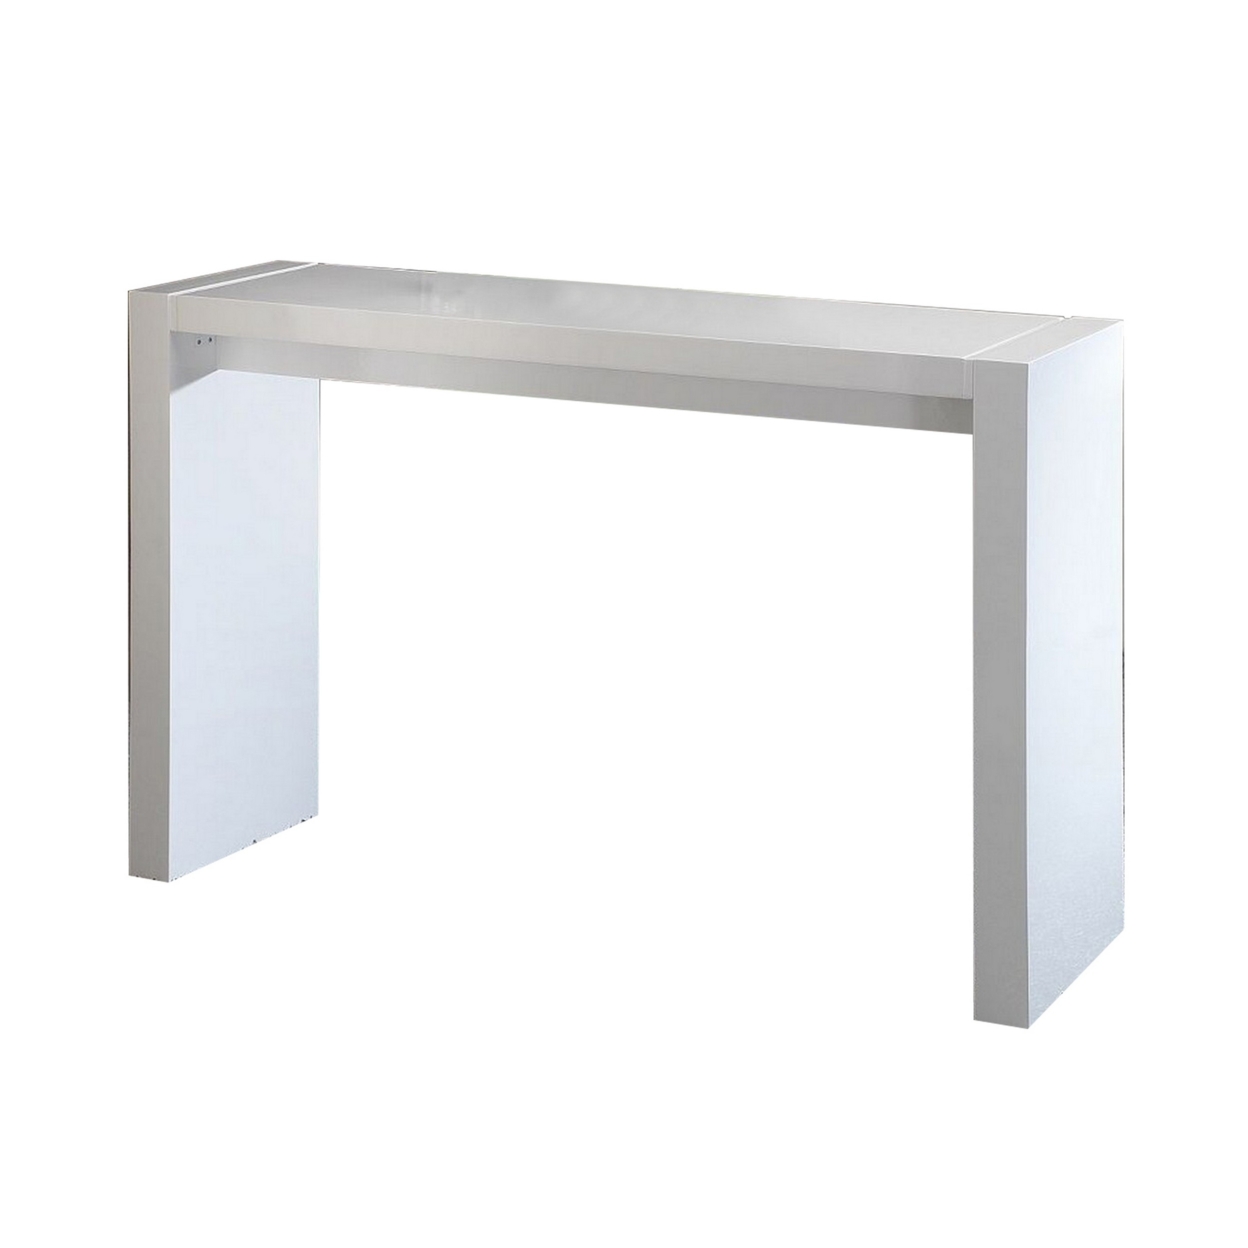 Joey 60 Inch Modern Bar Table, Lacquered White Finish, Composite Wood Frame- Saltoro Sherpi